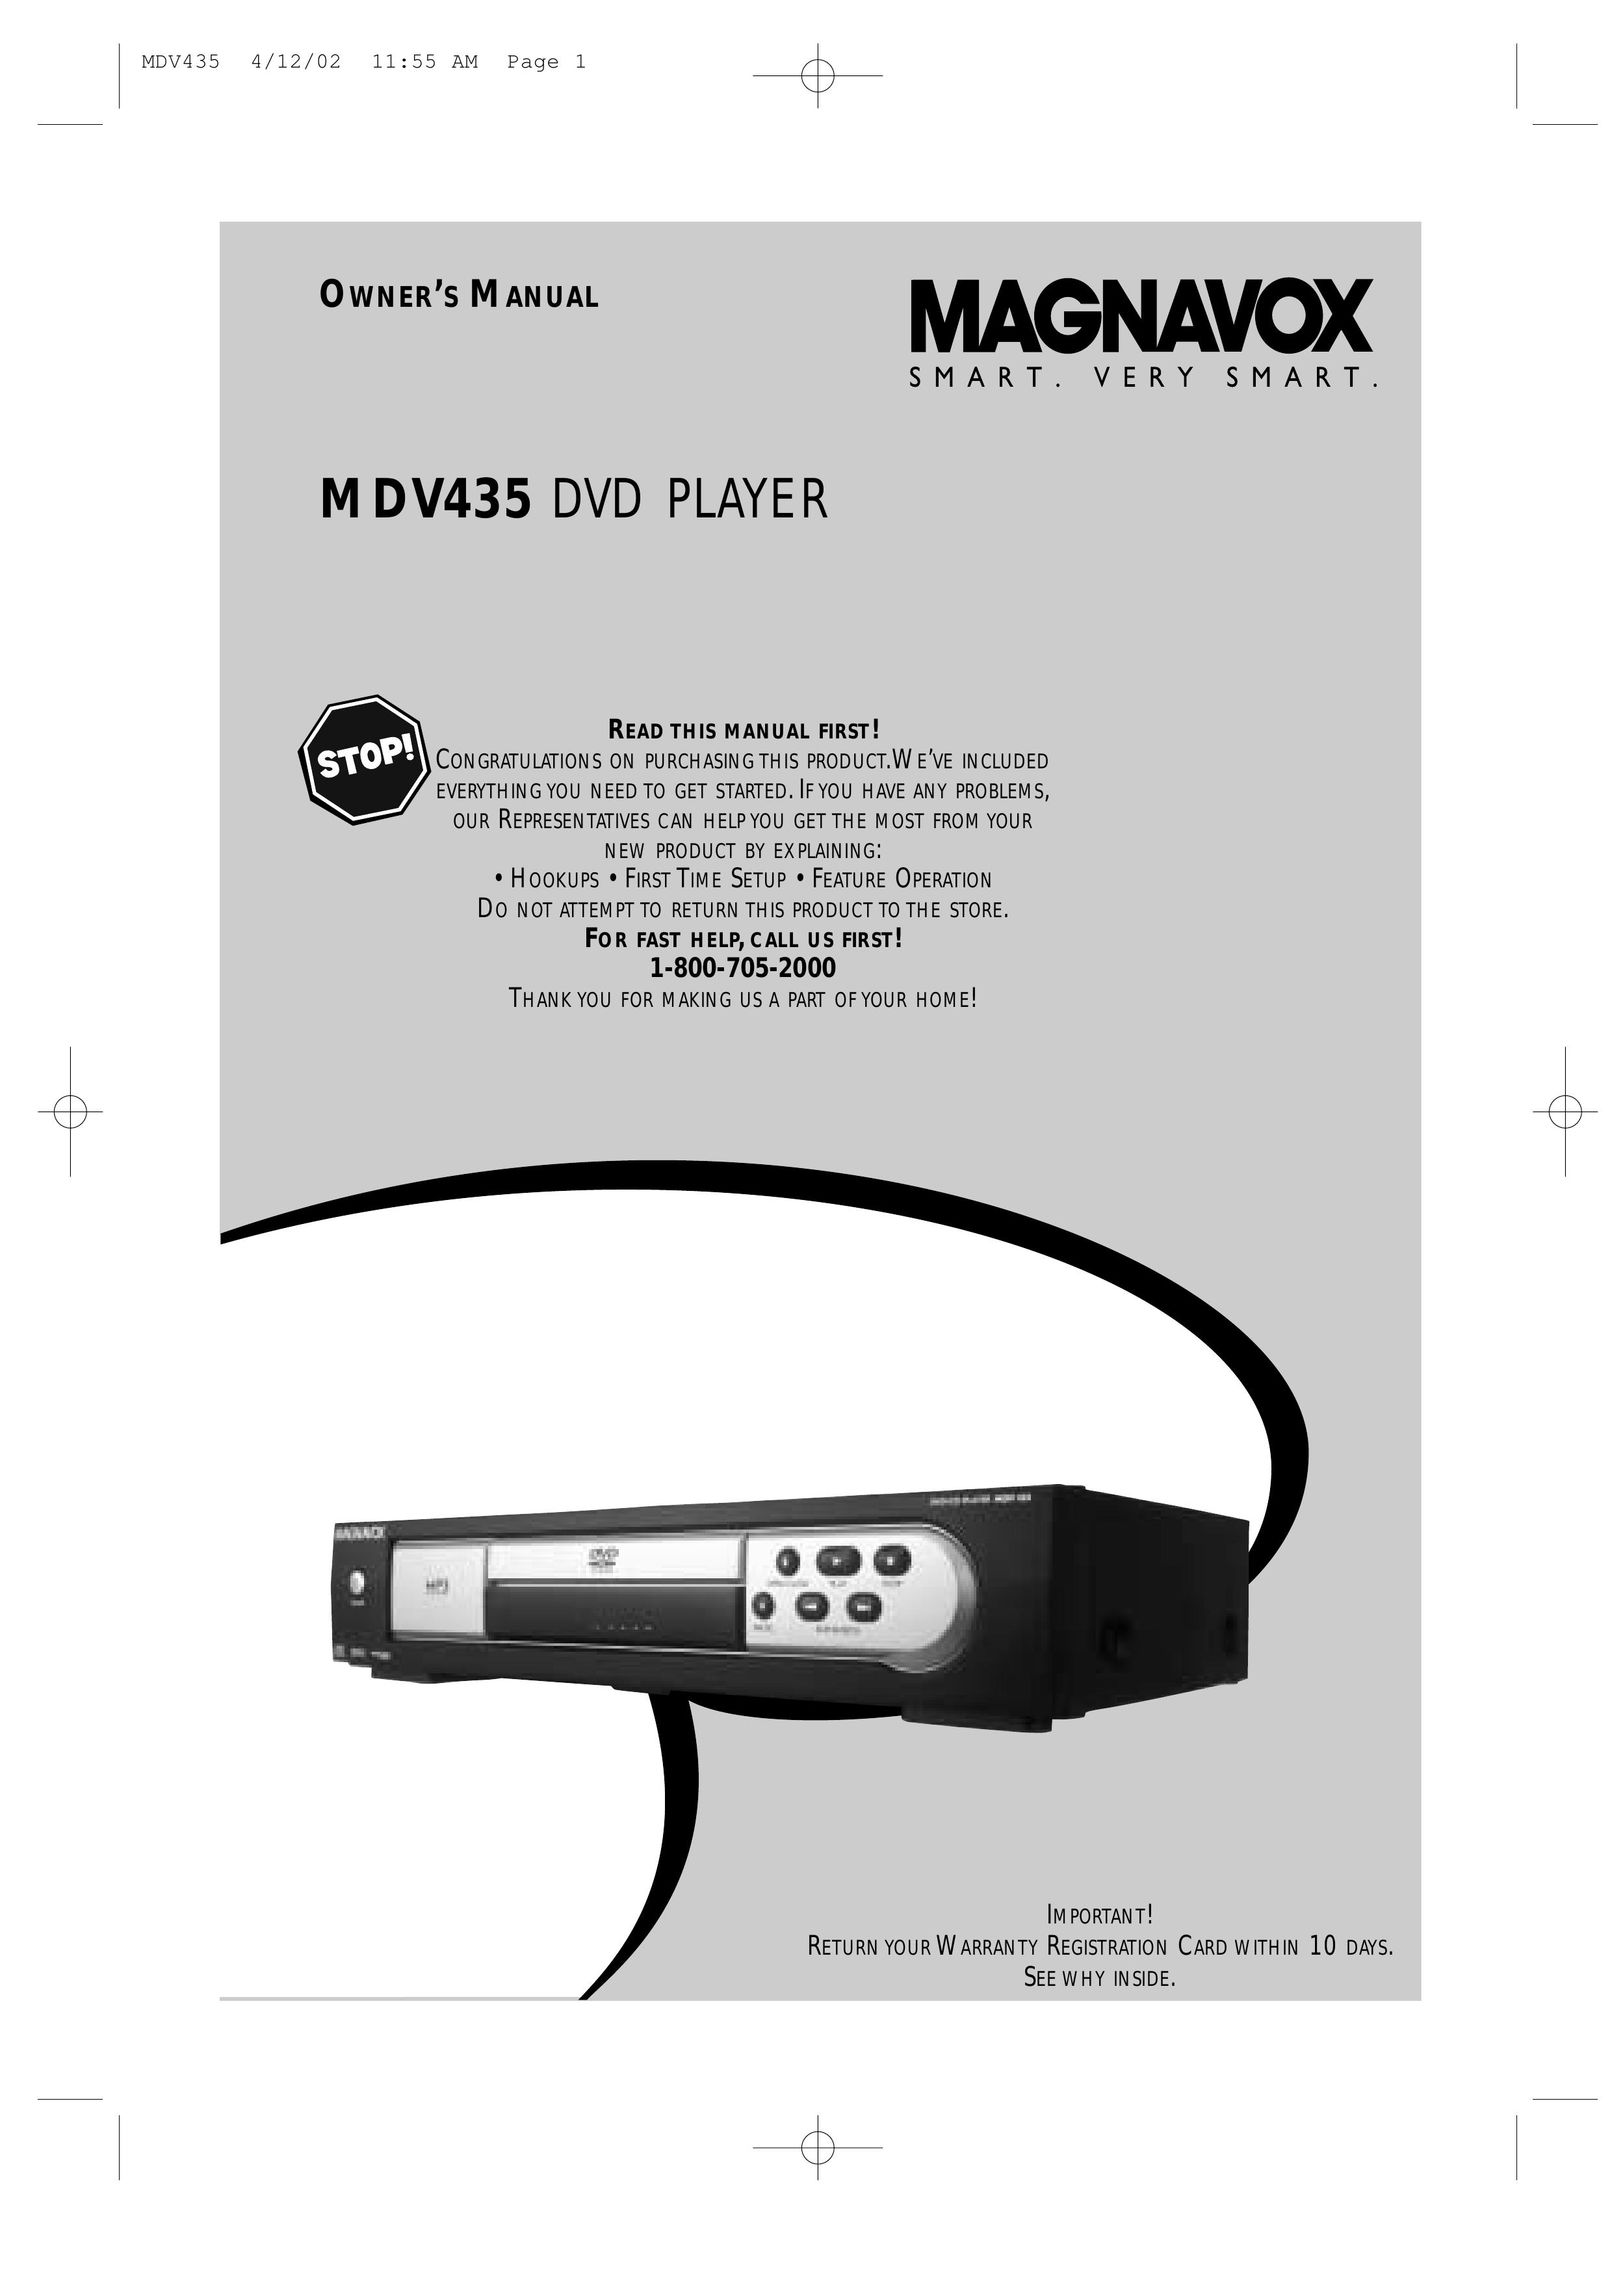 Magnavox MDV435 DVD Player User Manual